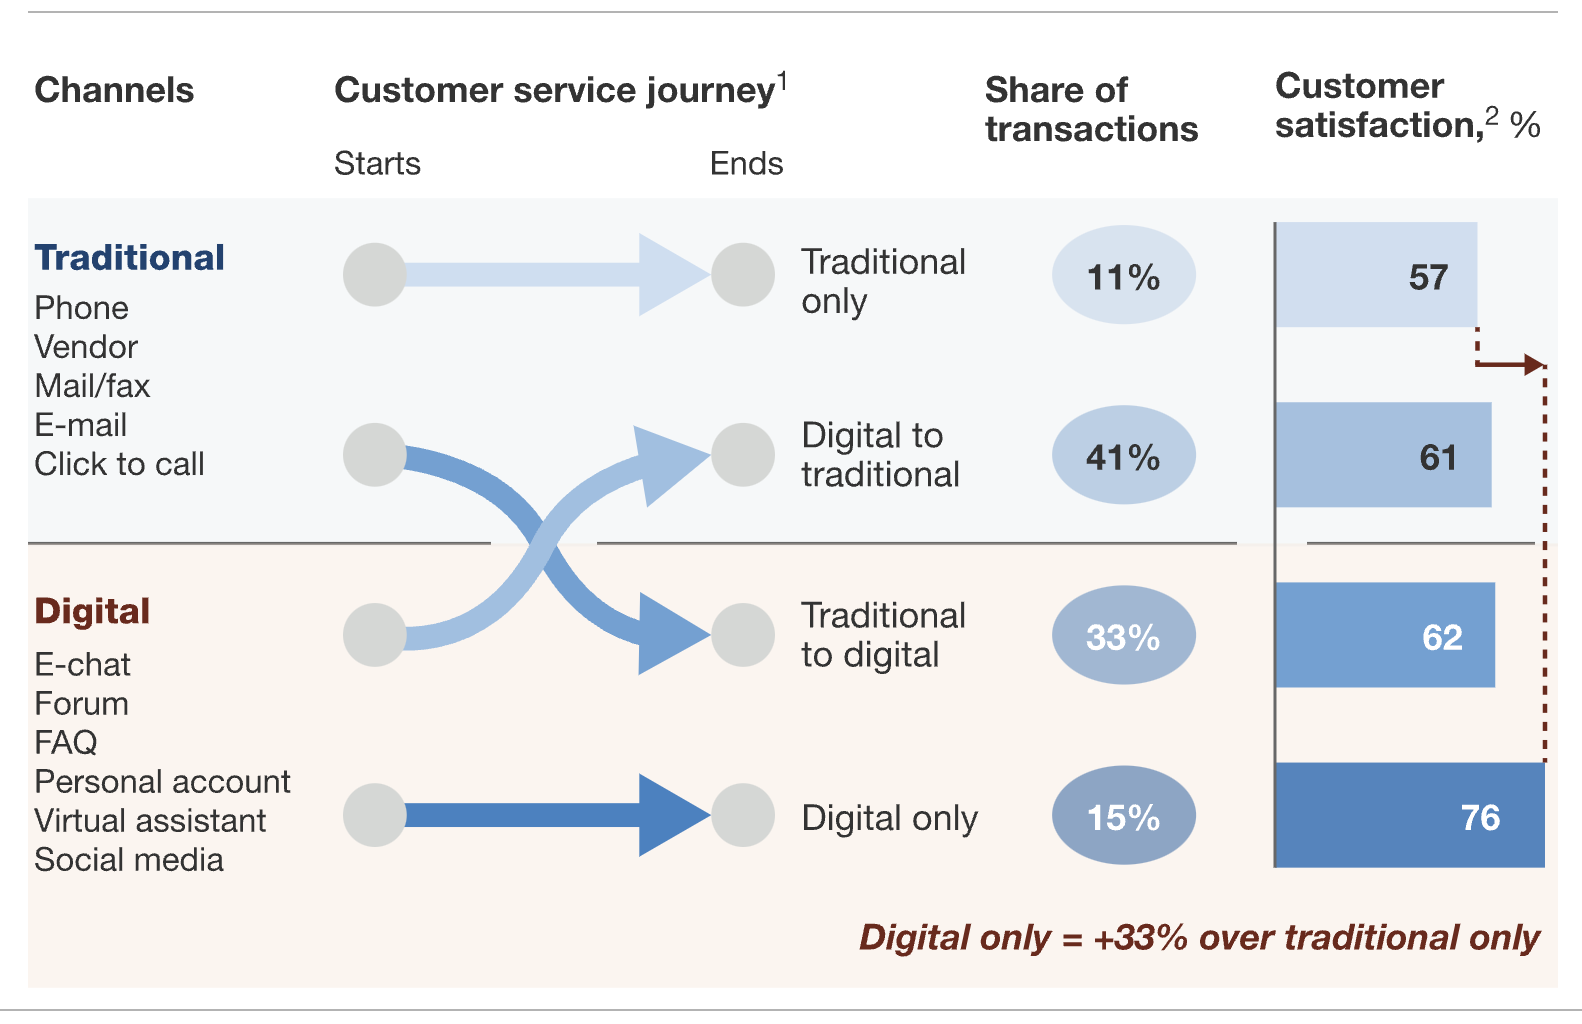 Screenshot from McKinsey showing traditional vs digital customer service journey